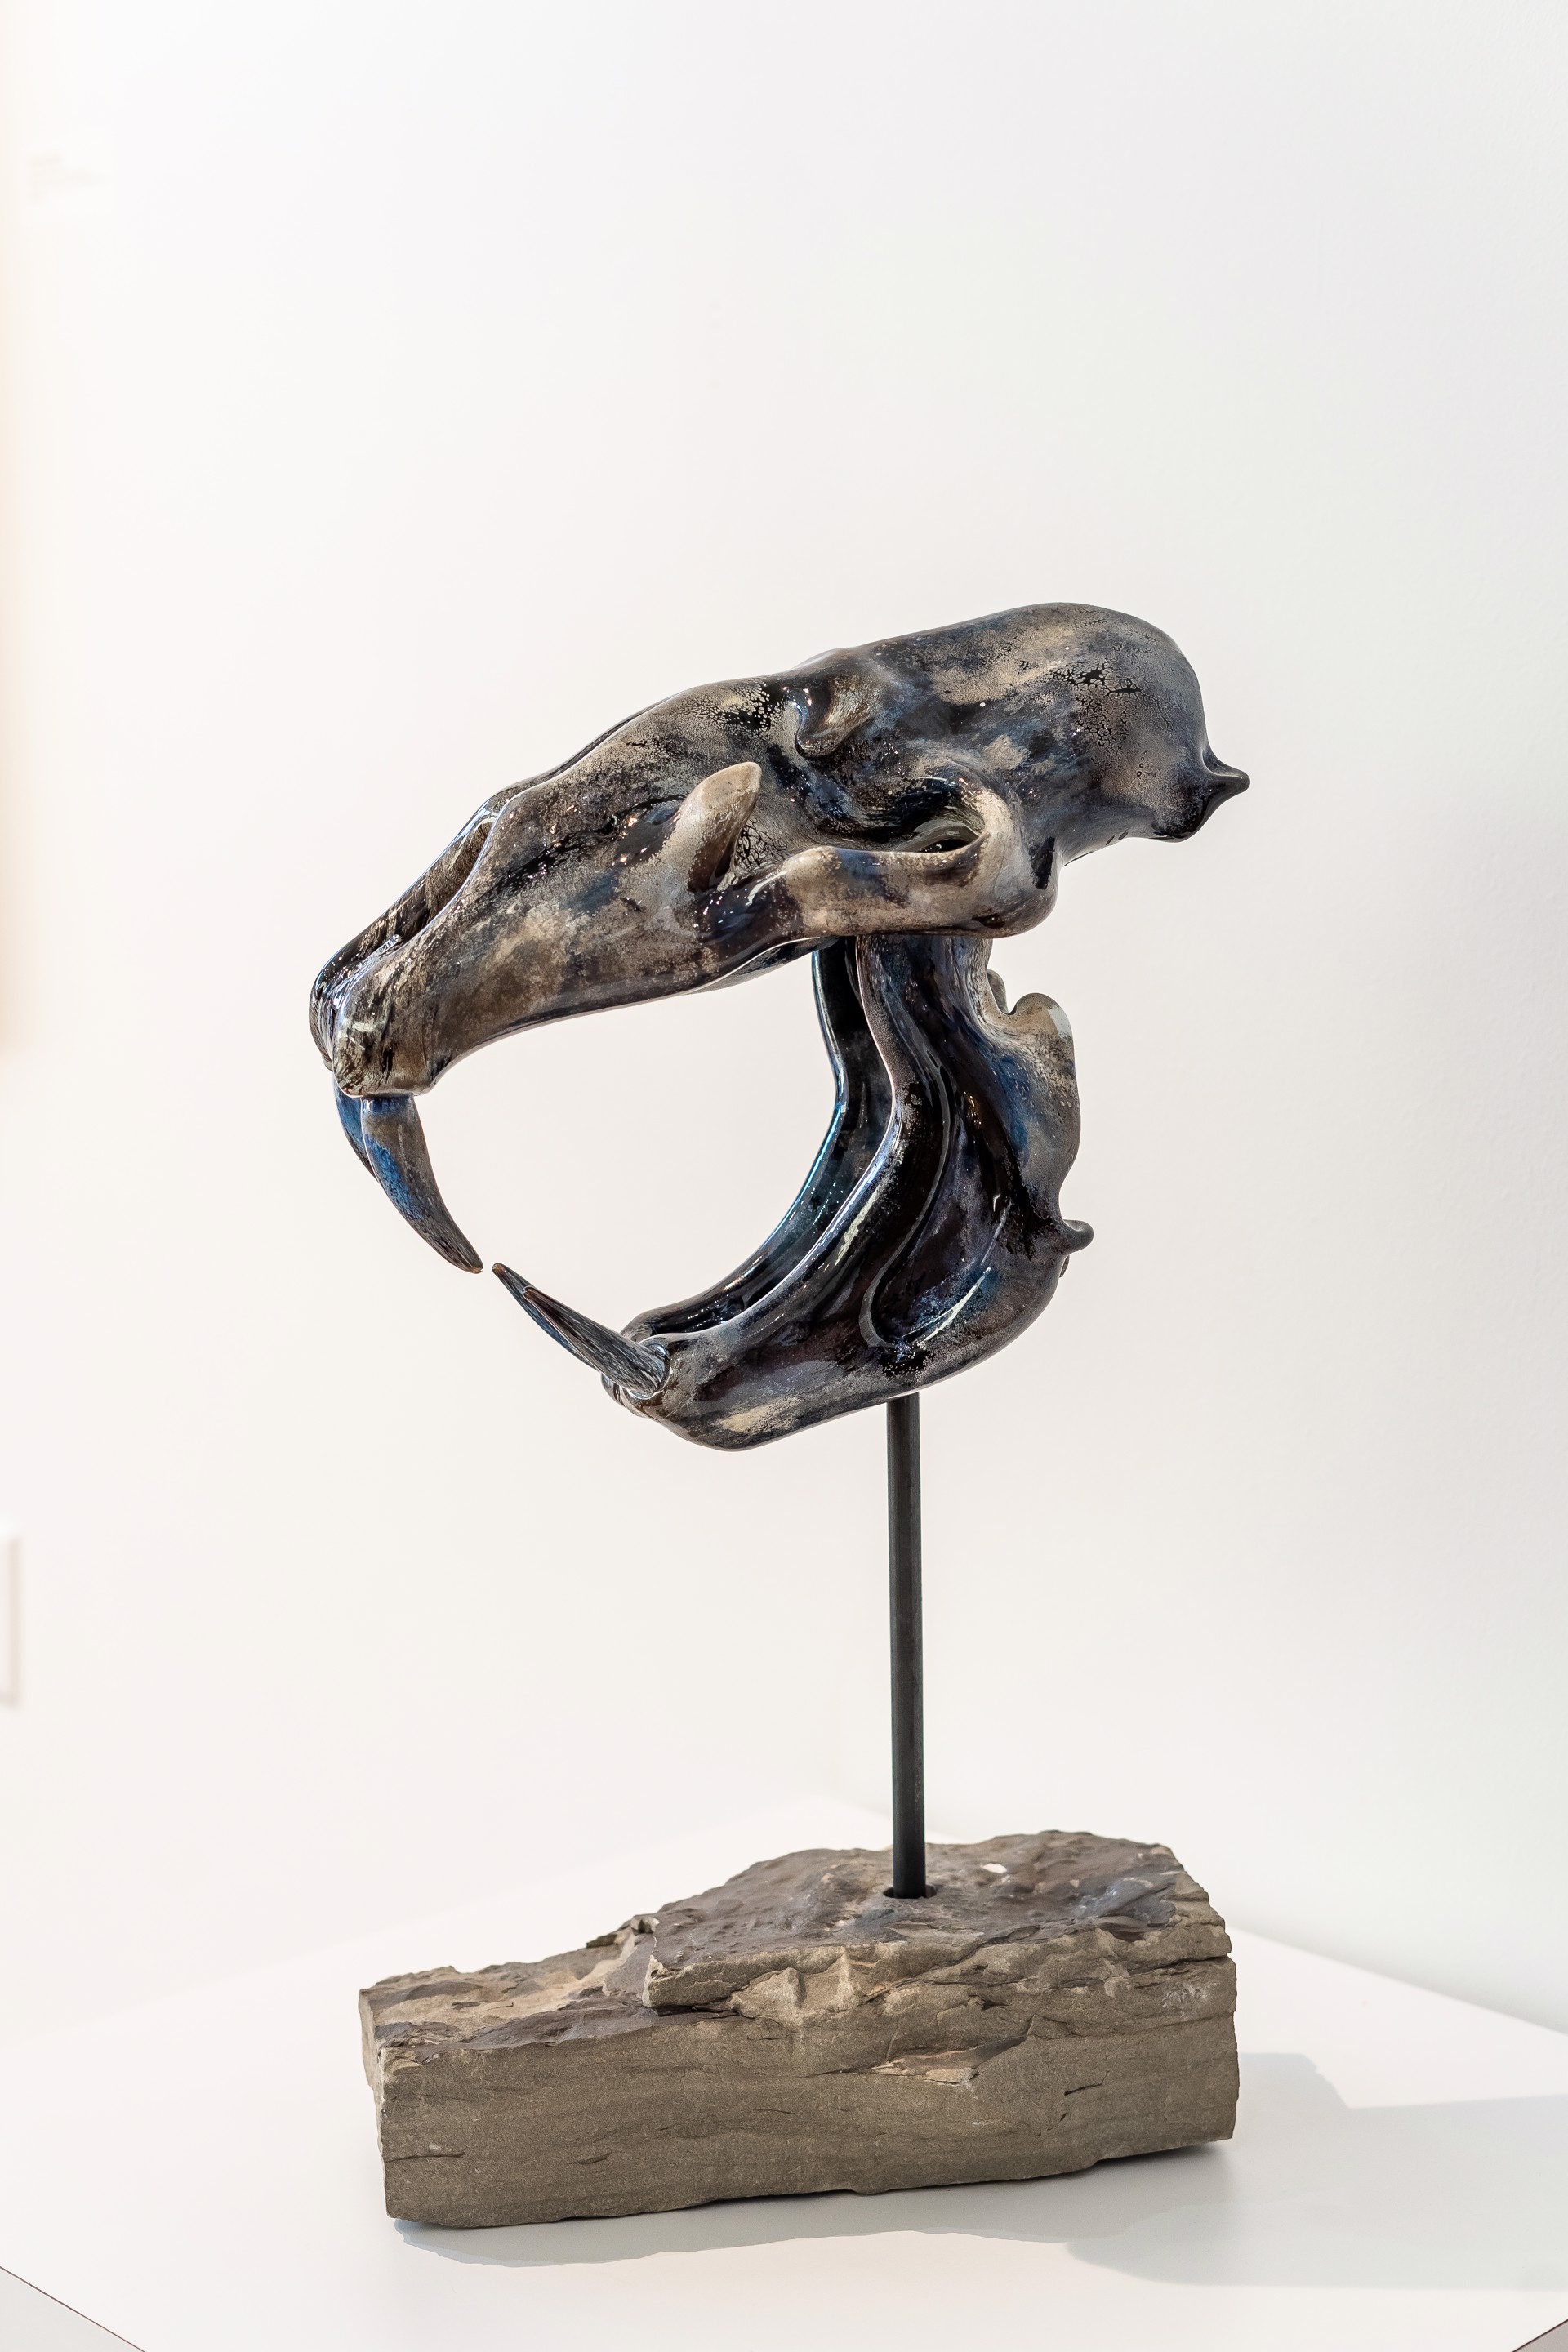 Sabertooth Skull by David Gappa